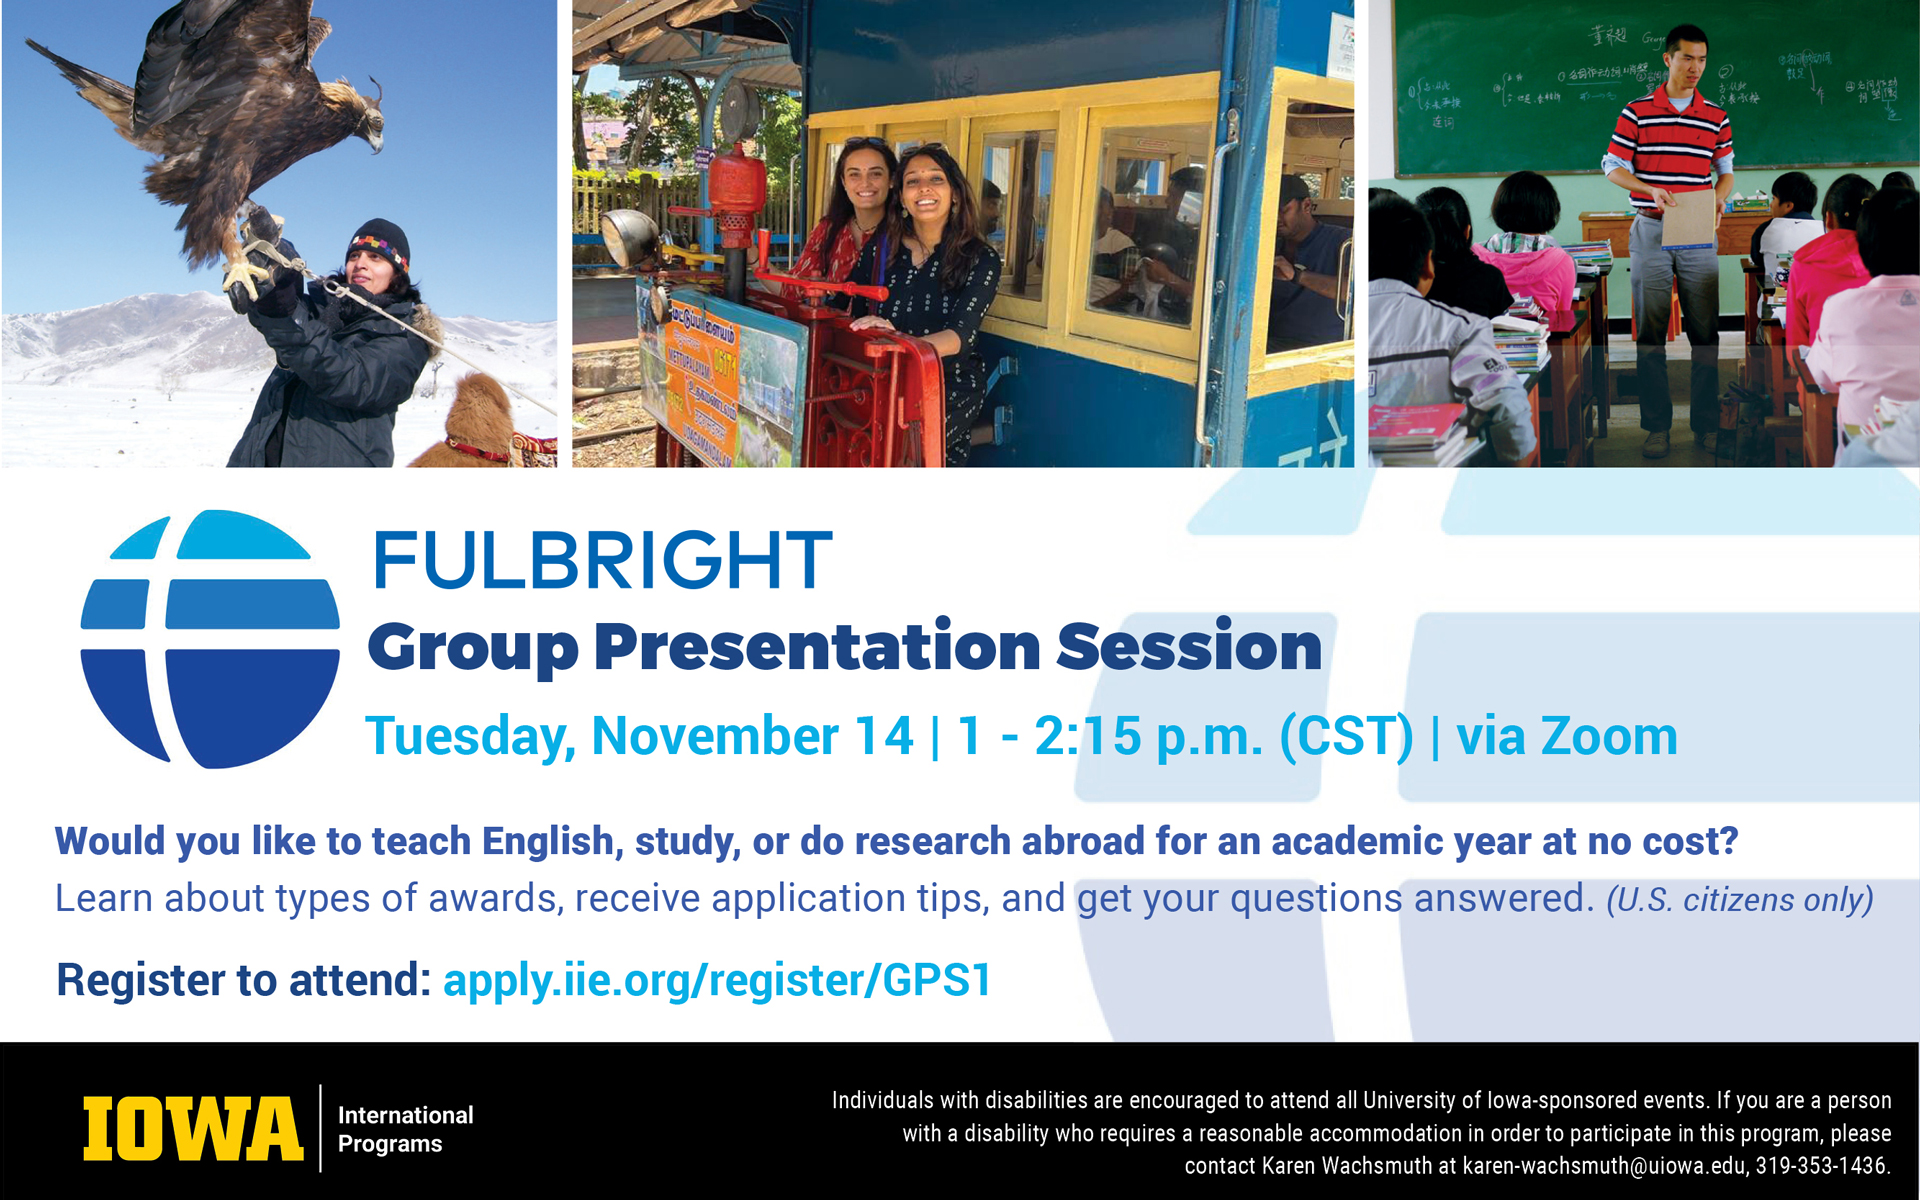 Fulbright Group Presentation Session: Nov. 14 at 1:00 p.m.